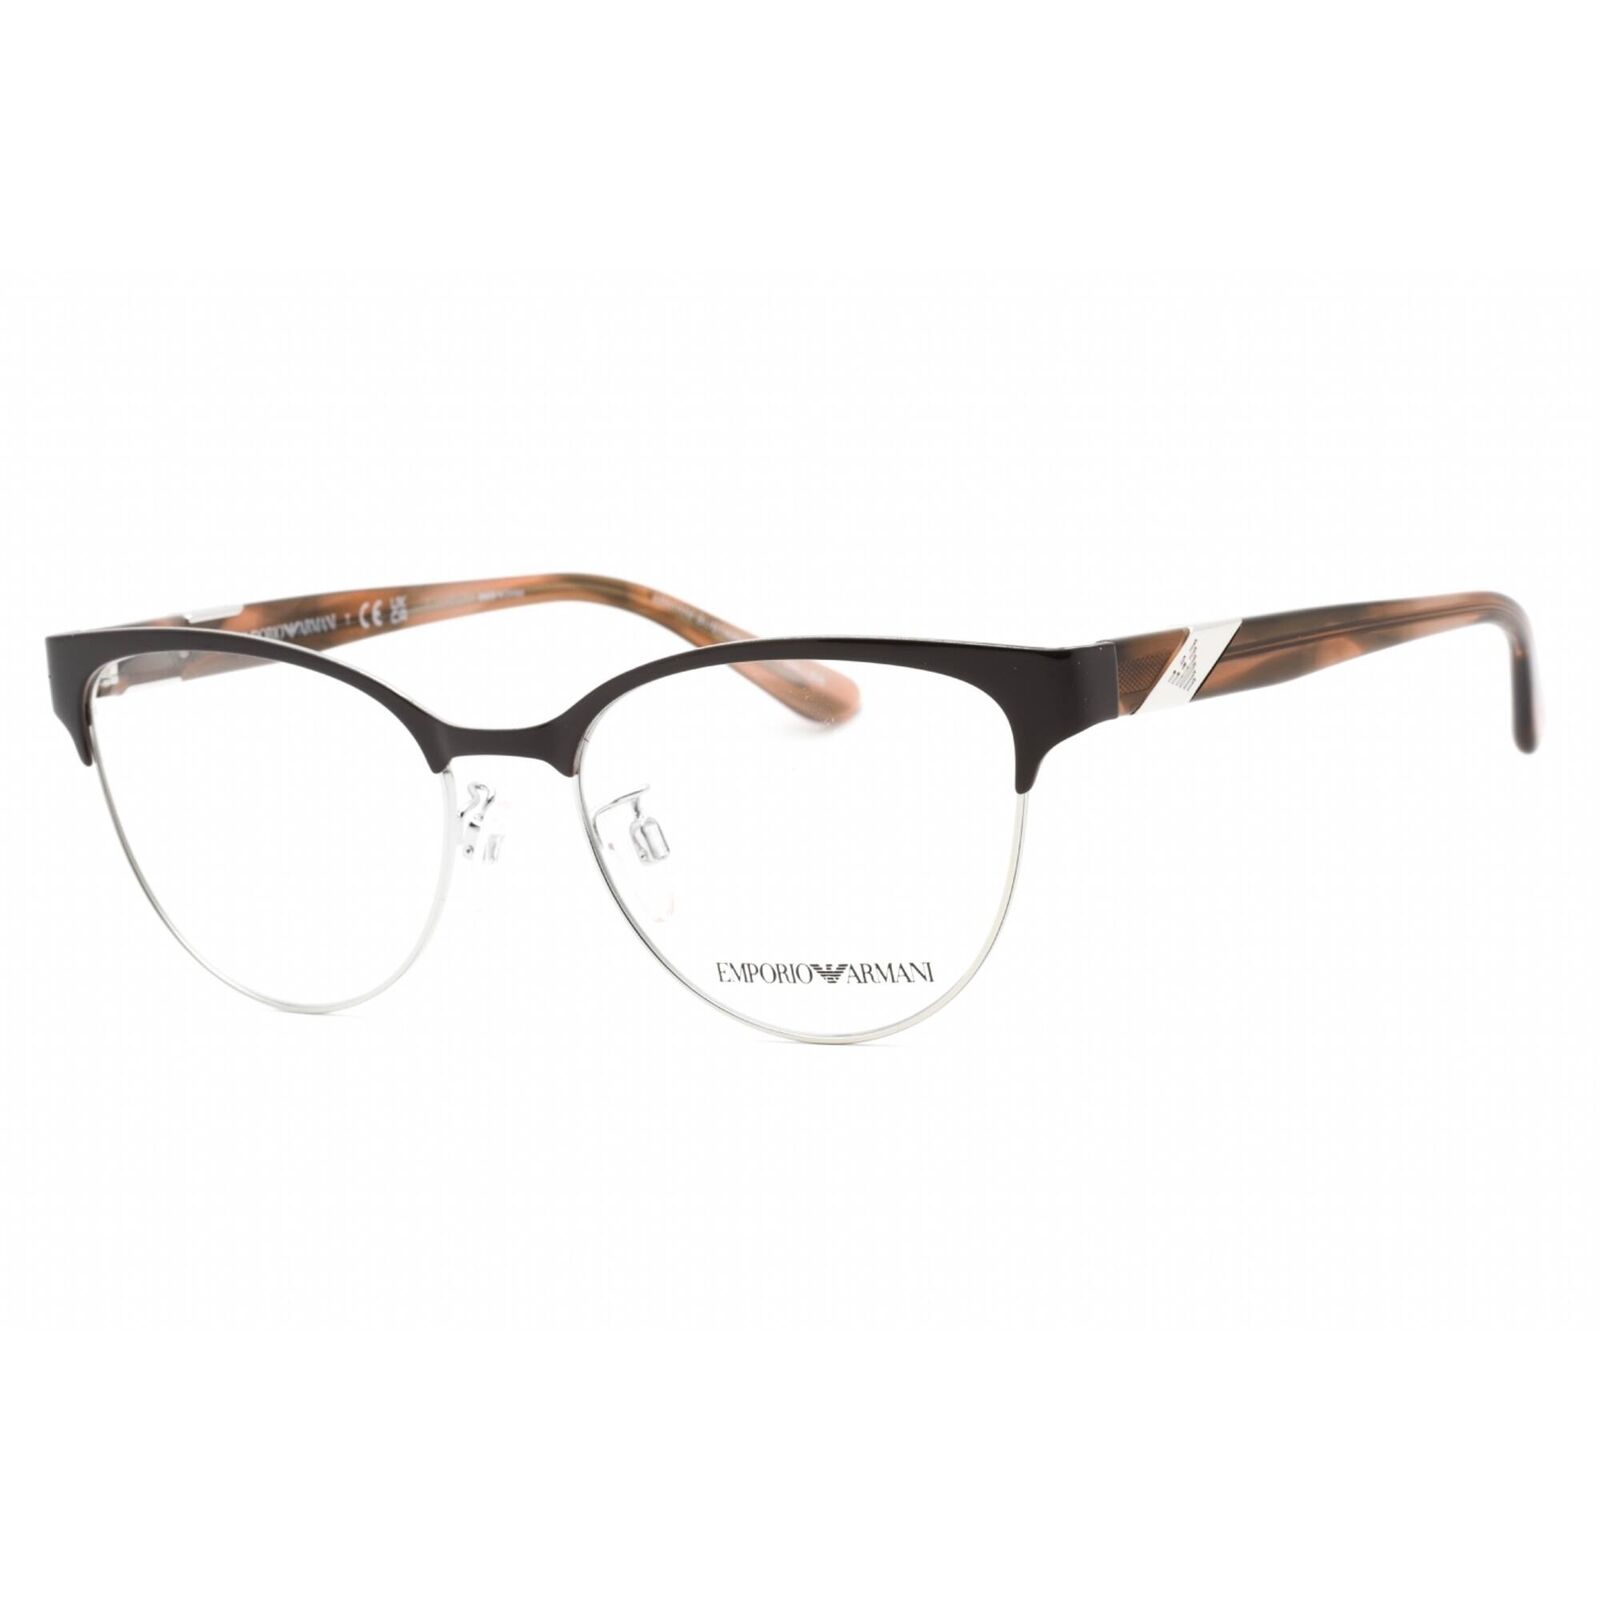 Emporio Armani Women's Eyeglasses Shiny Brown/Silver Cat Eye Frame 0EA1130 3178 Emporio Armani 0EA1130 3178